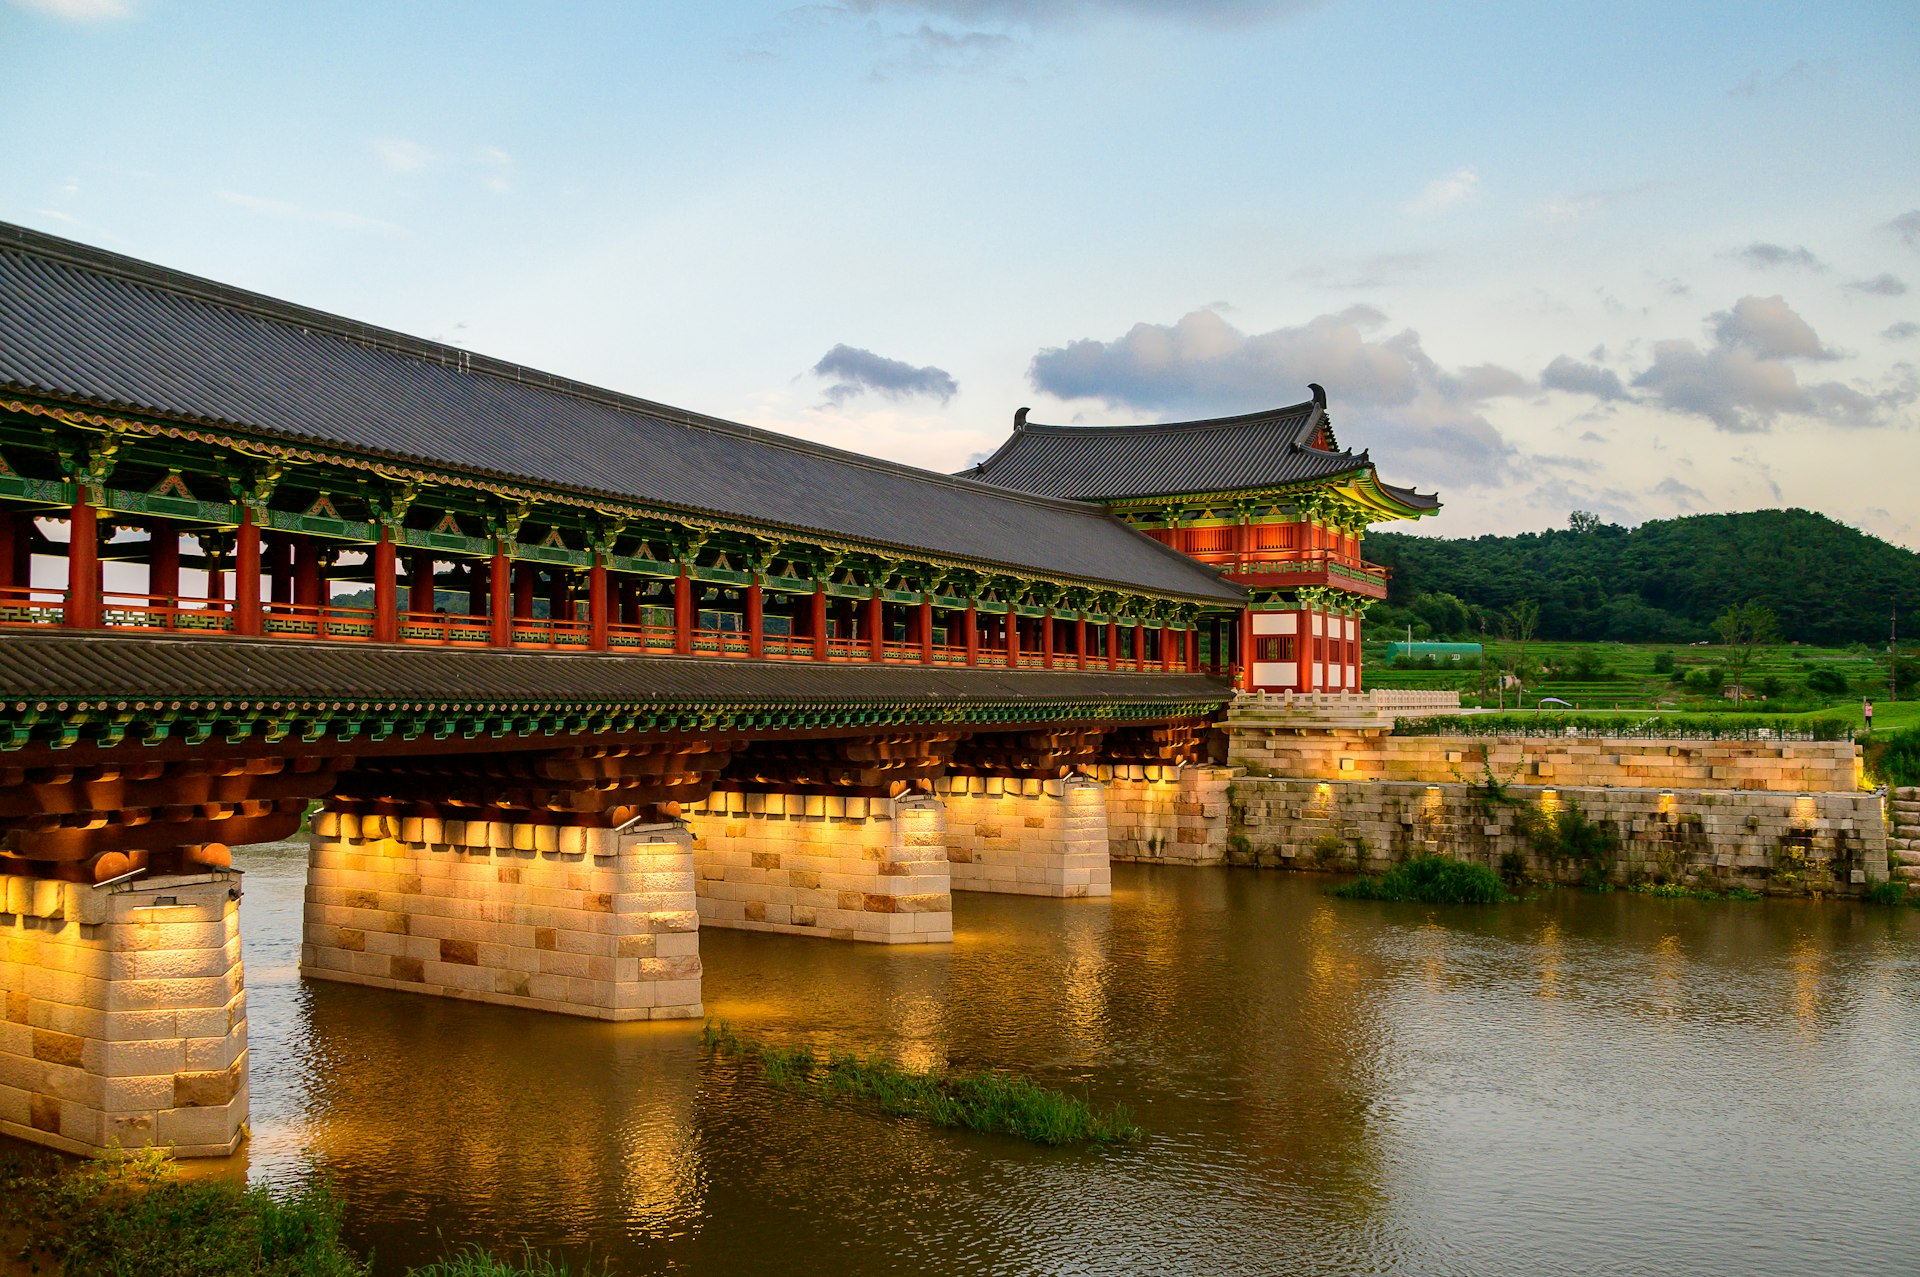 View of the famous Woljeong bridge in Gyeongju